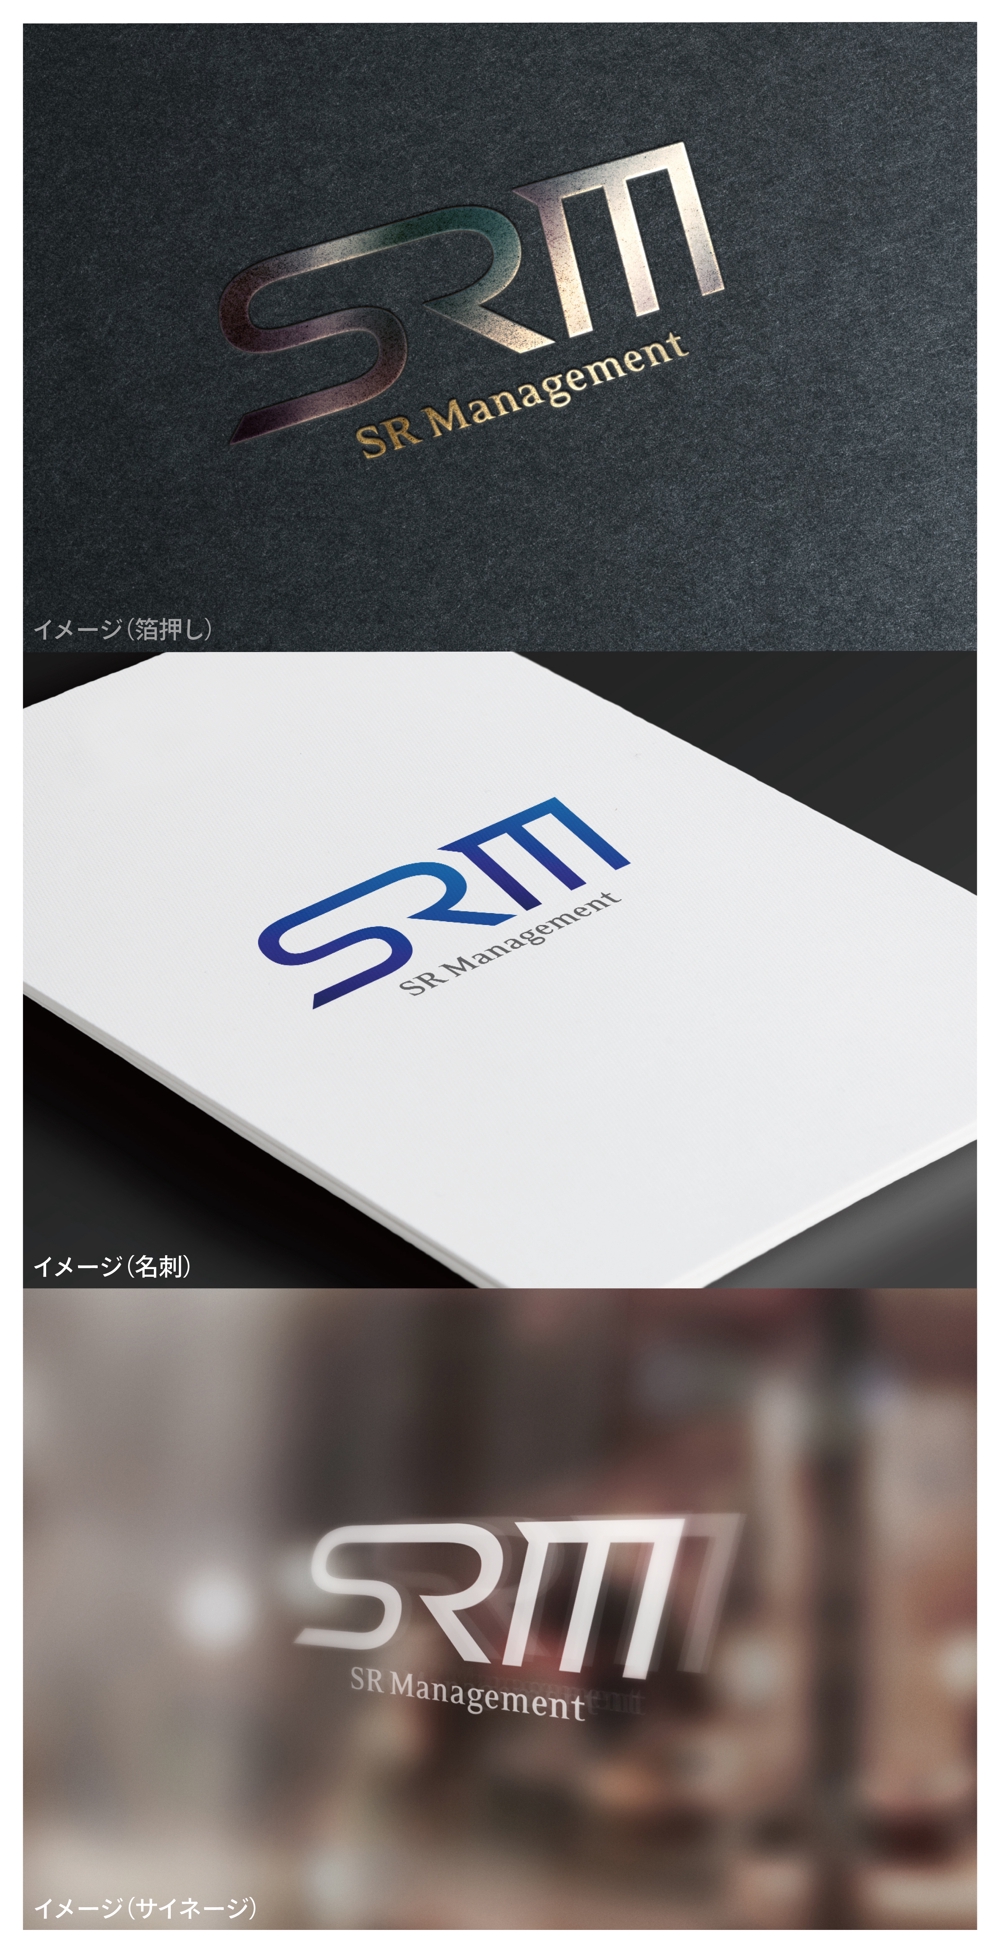 SRM_logo01_01.jpg